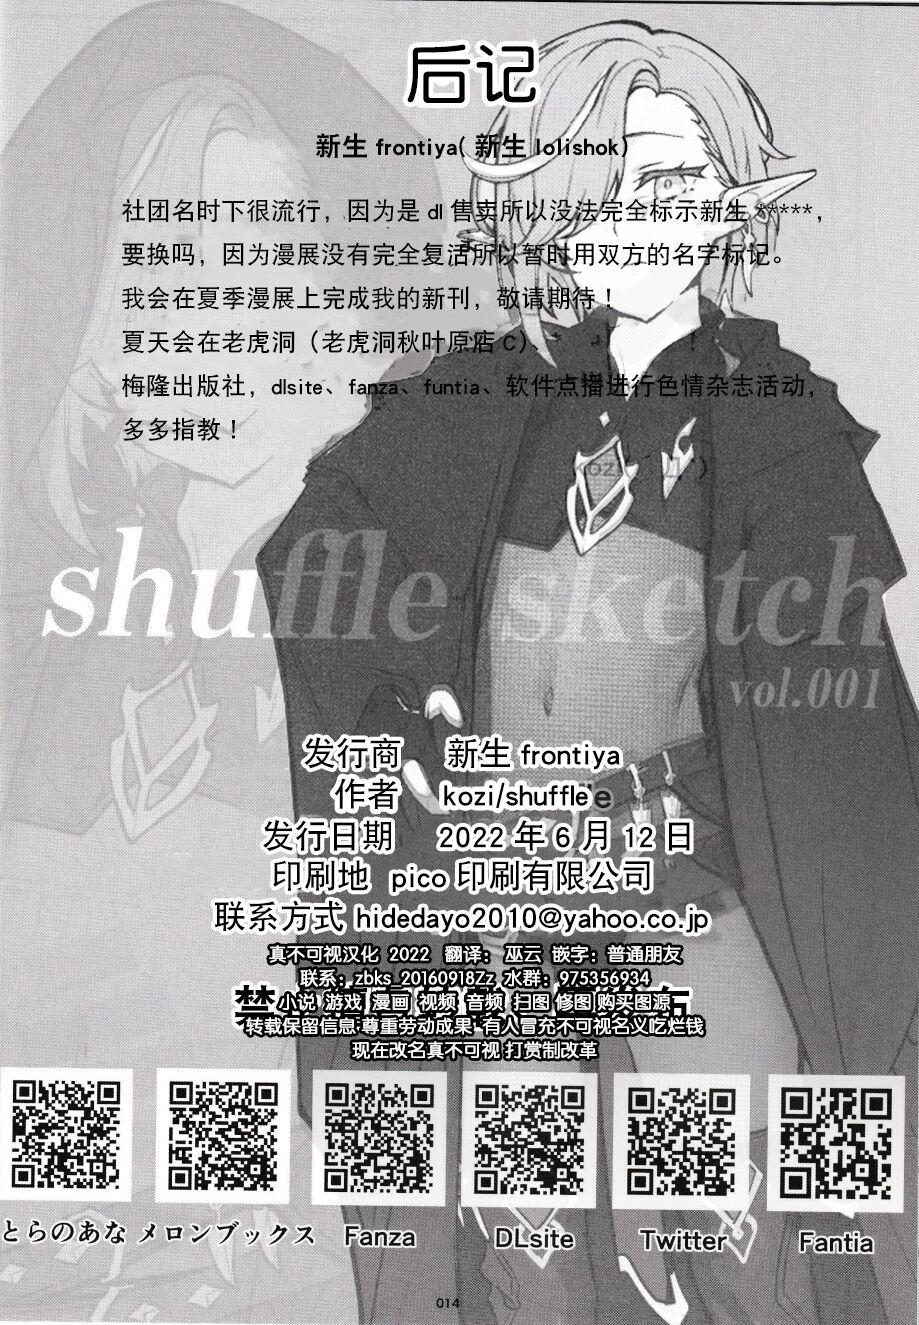 shuffle sketch vol.001 12